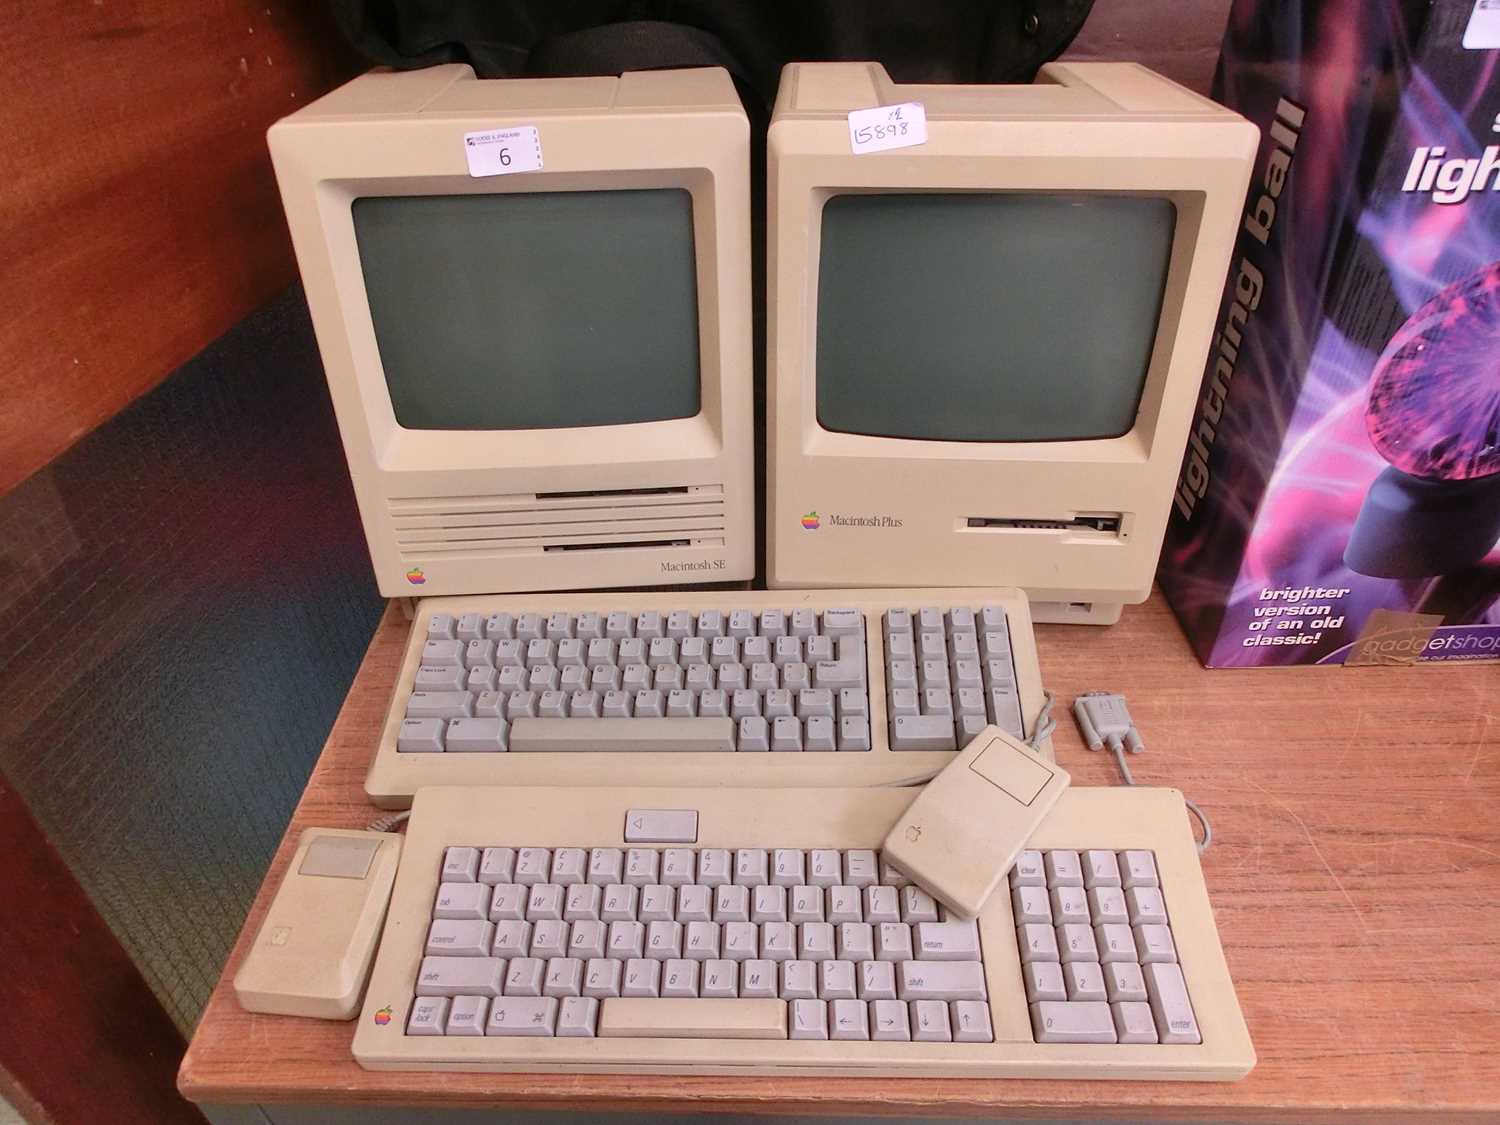 An Apple Macintosh SE computer, along with an Apple Macintosh Plus computer, both with keyboards and